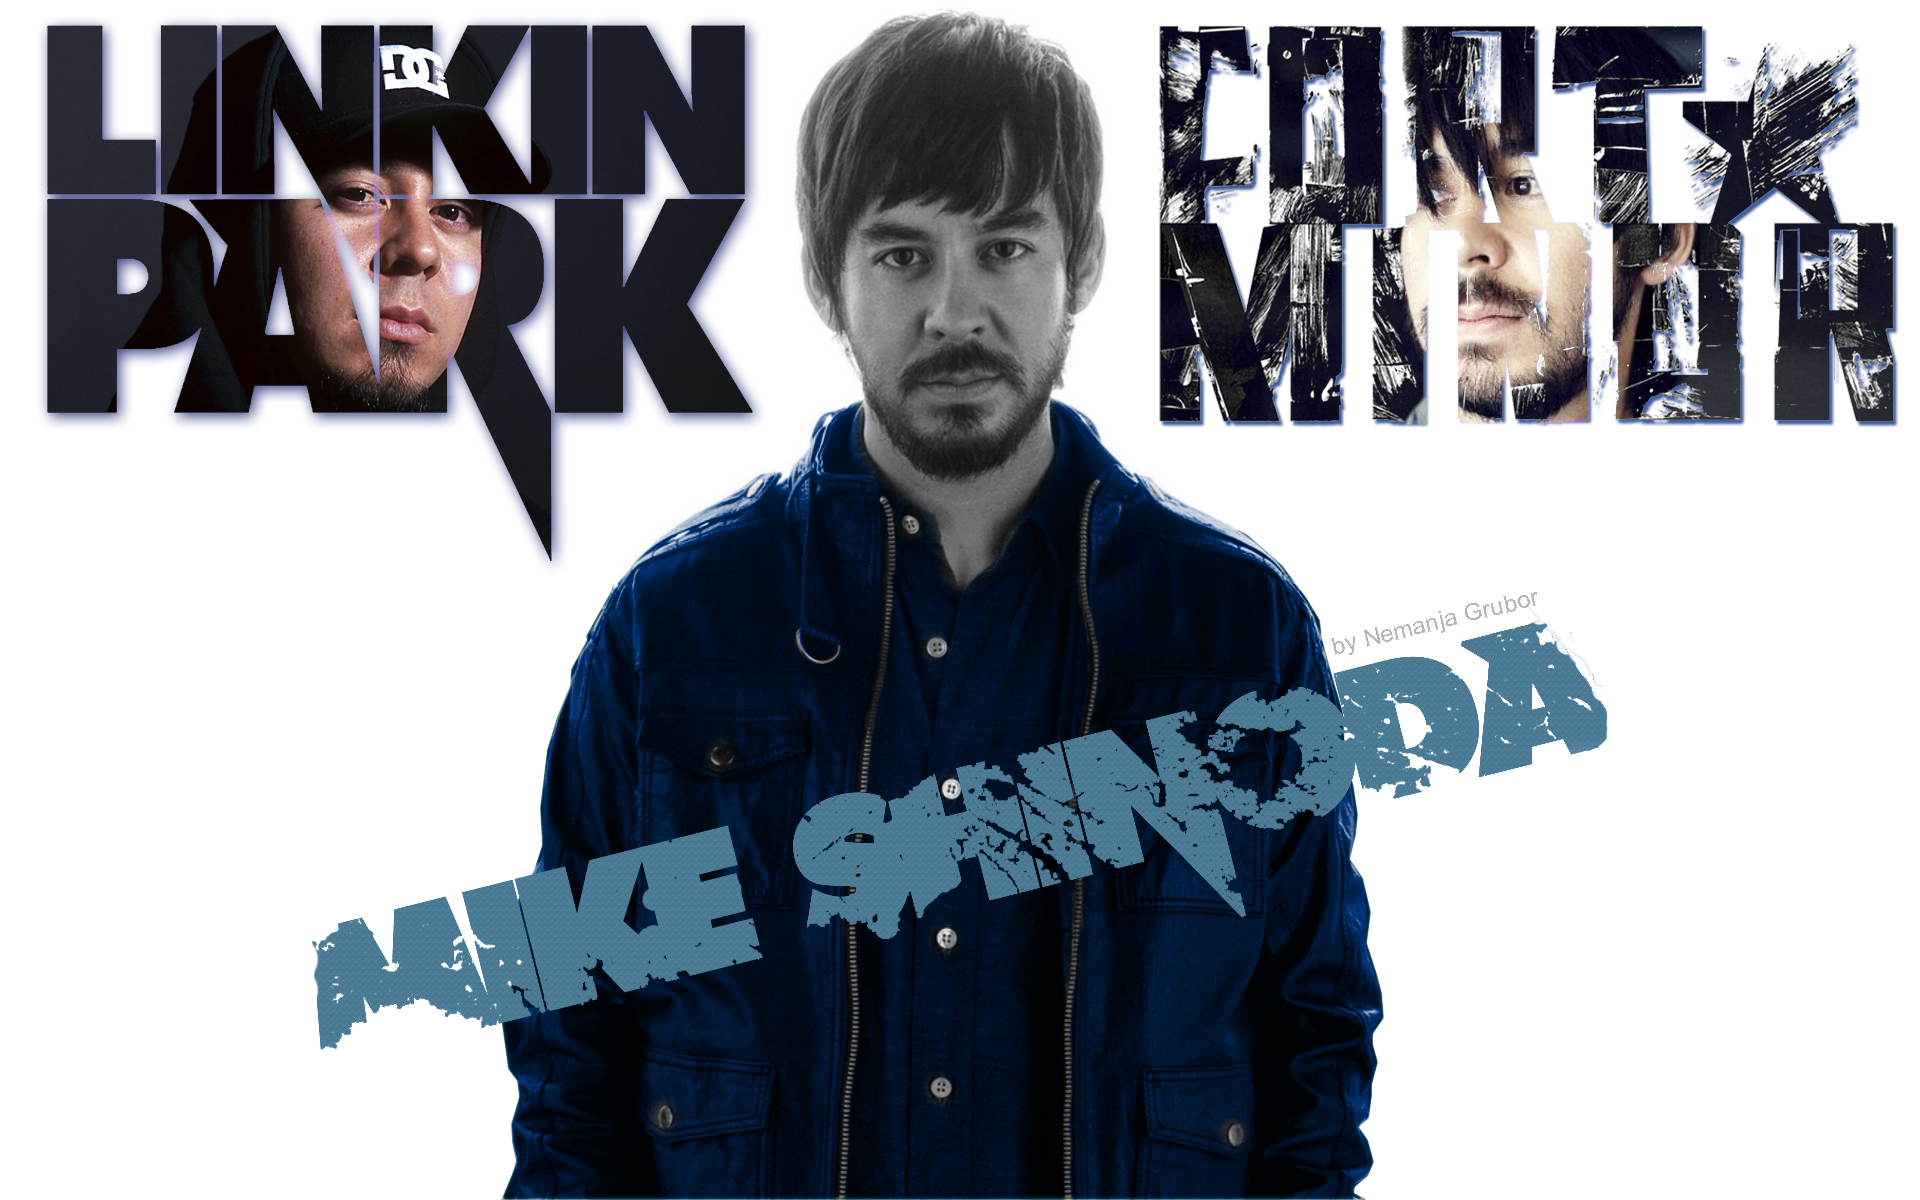 Mike Shinoda Linkin Park Fort Minor By Ngrubor